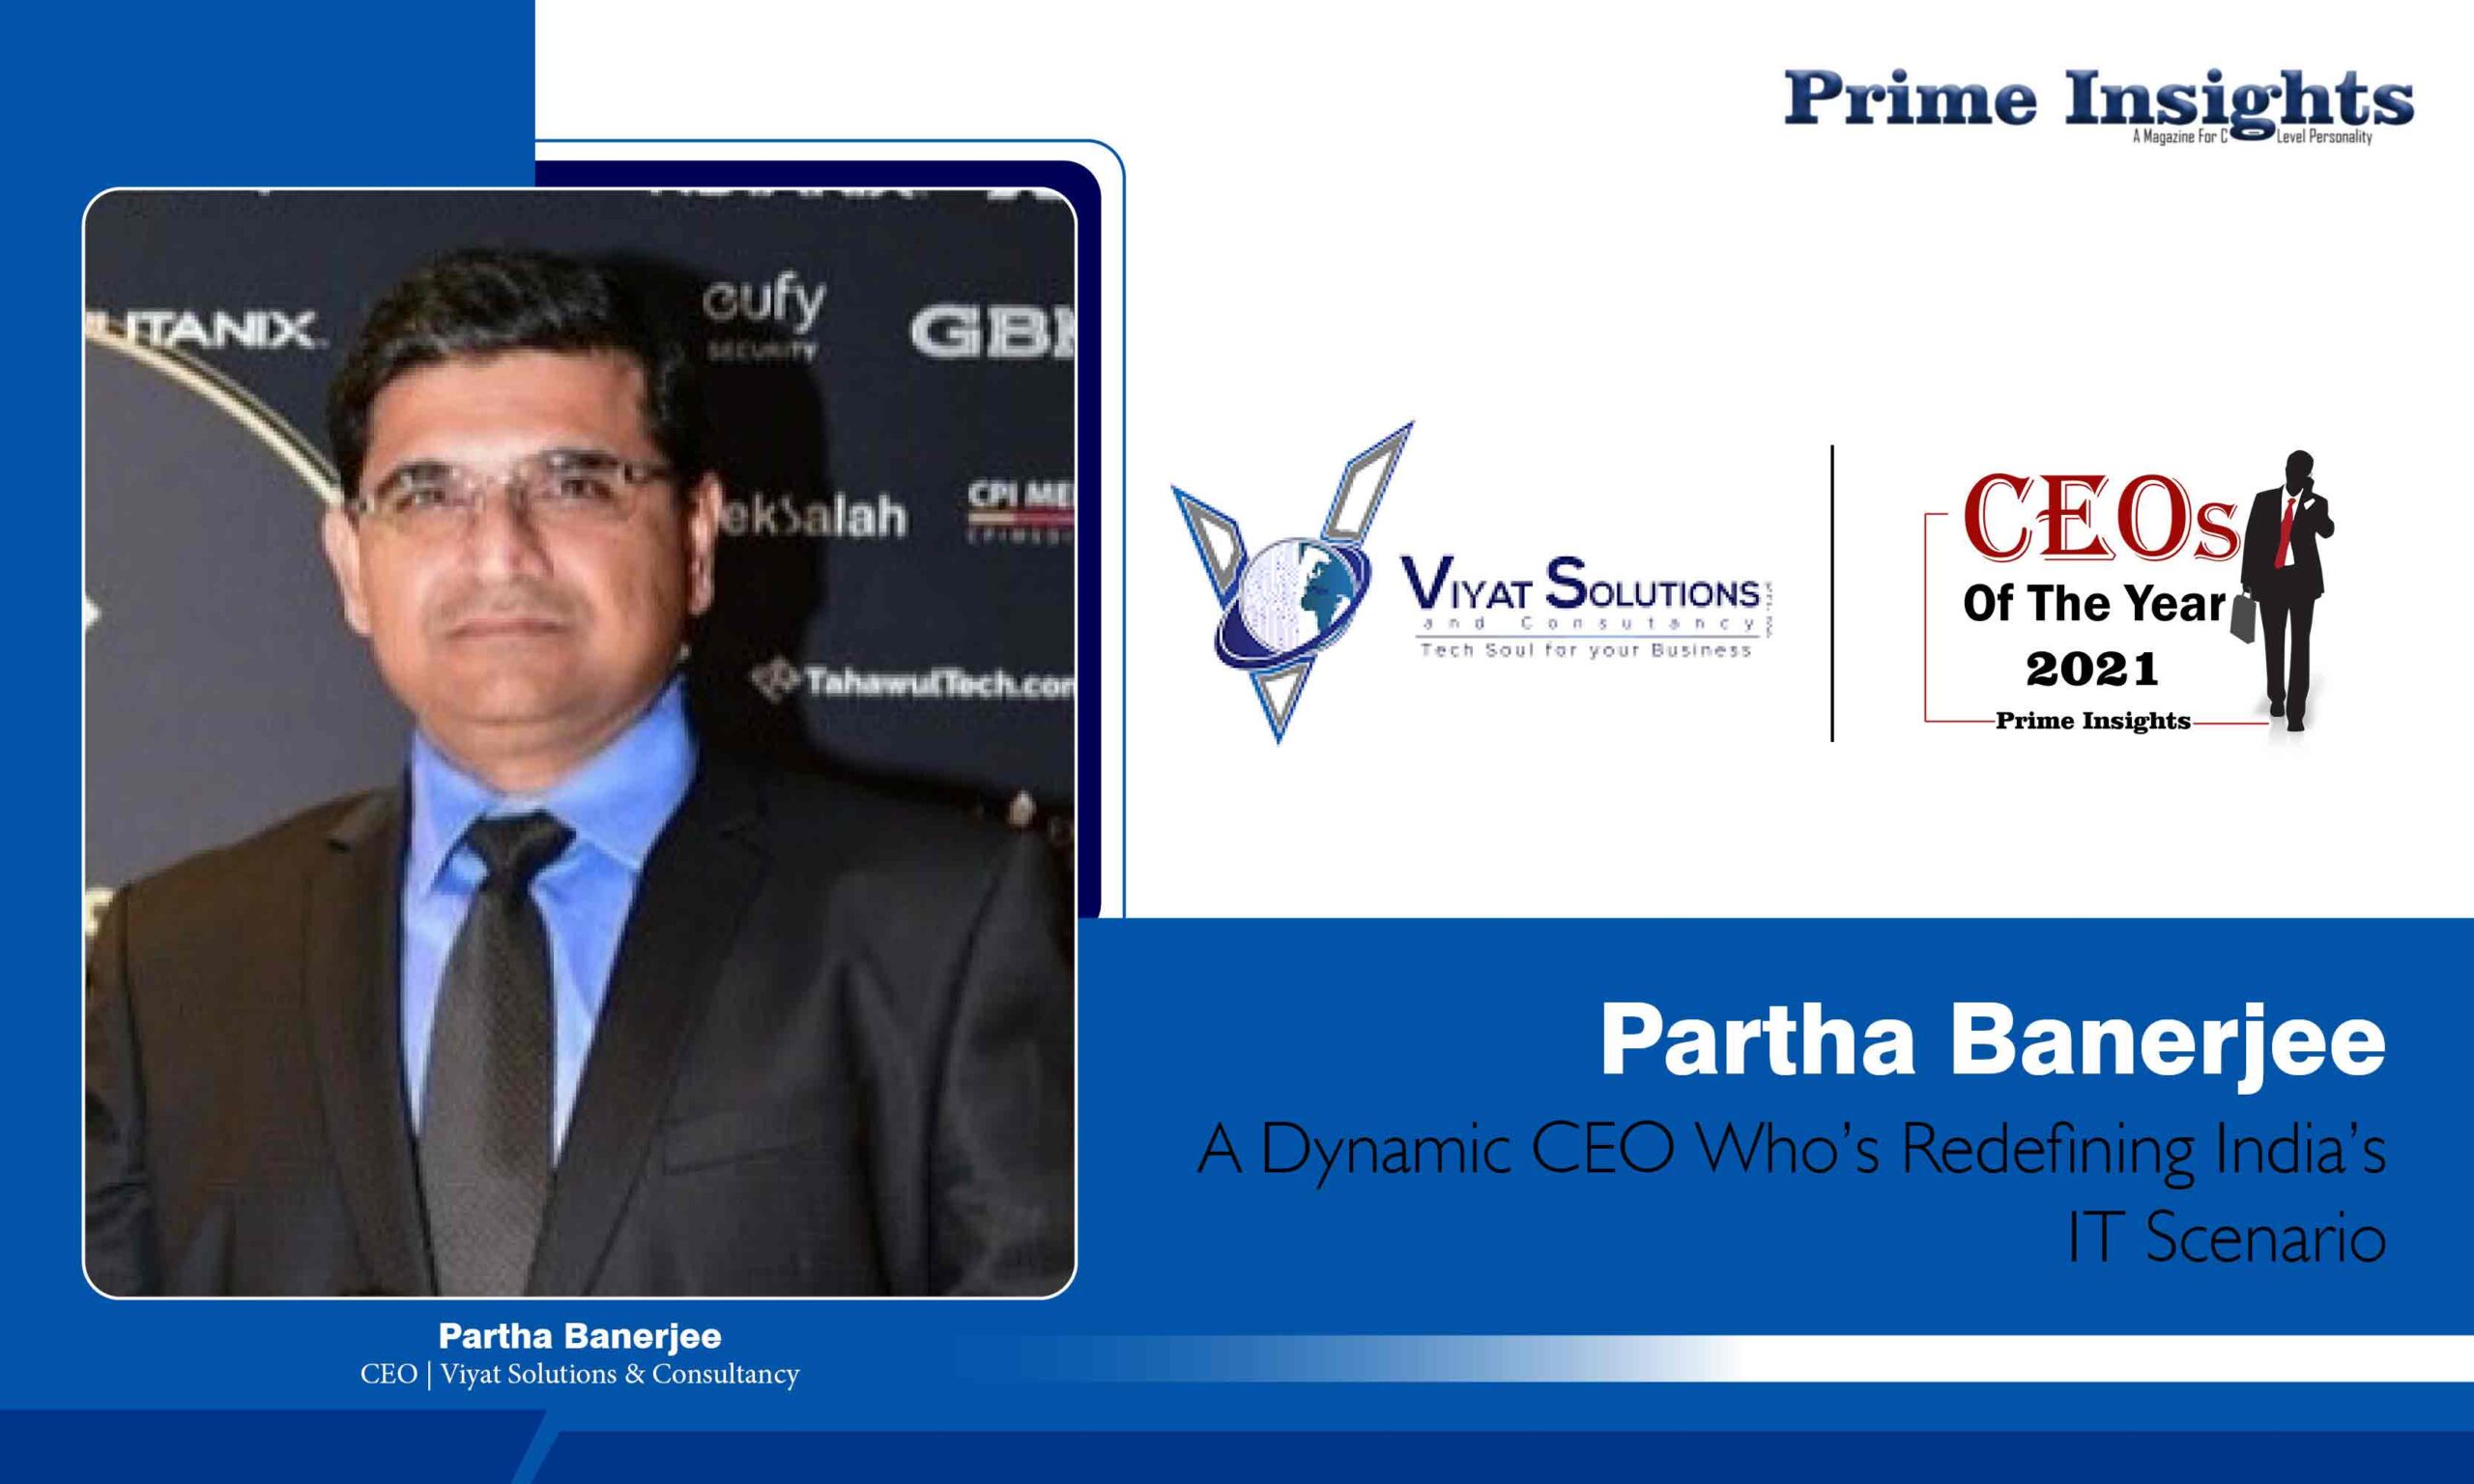 Partha Banerjee: A Dynamic CEO Who’s Redefining India’s IT Scenario